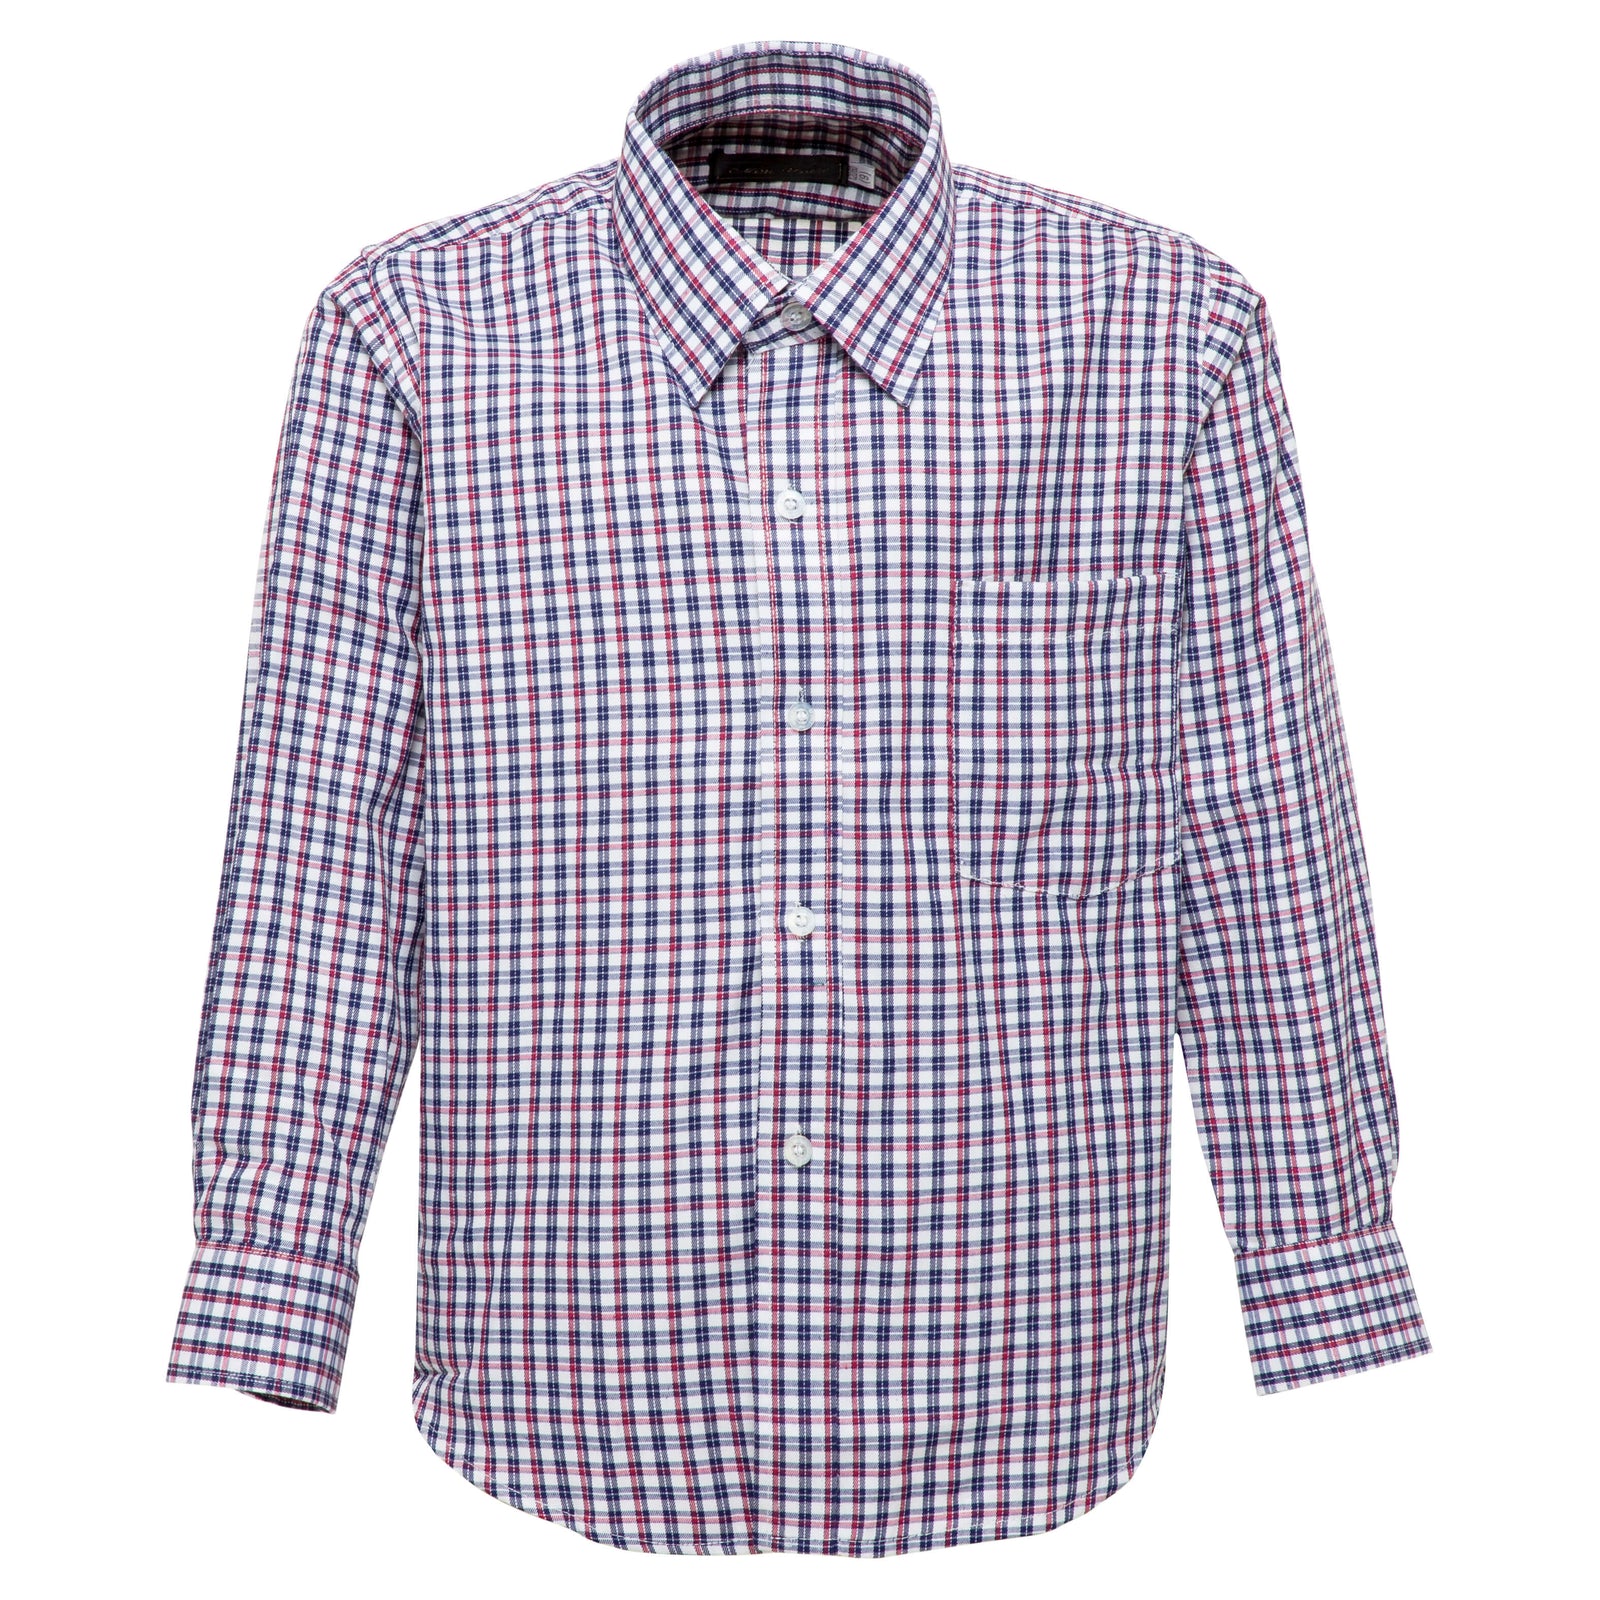 Boy formal dress button up shirts - Suit Lab